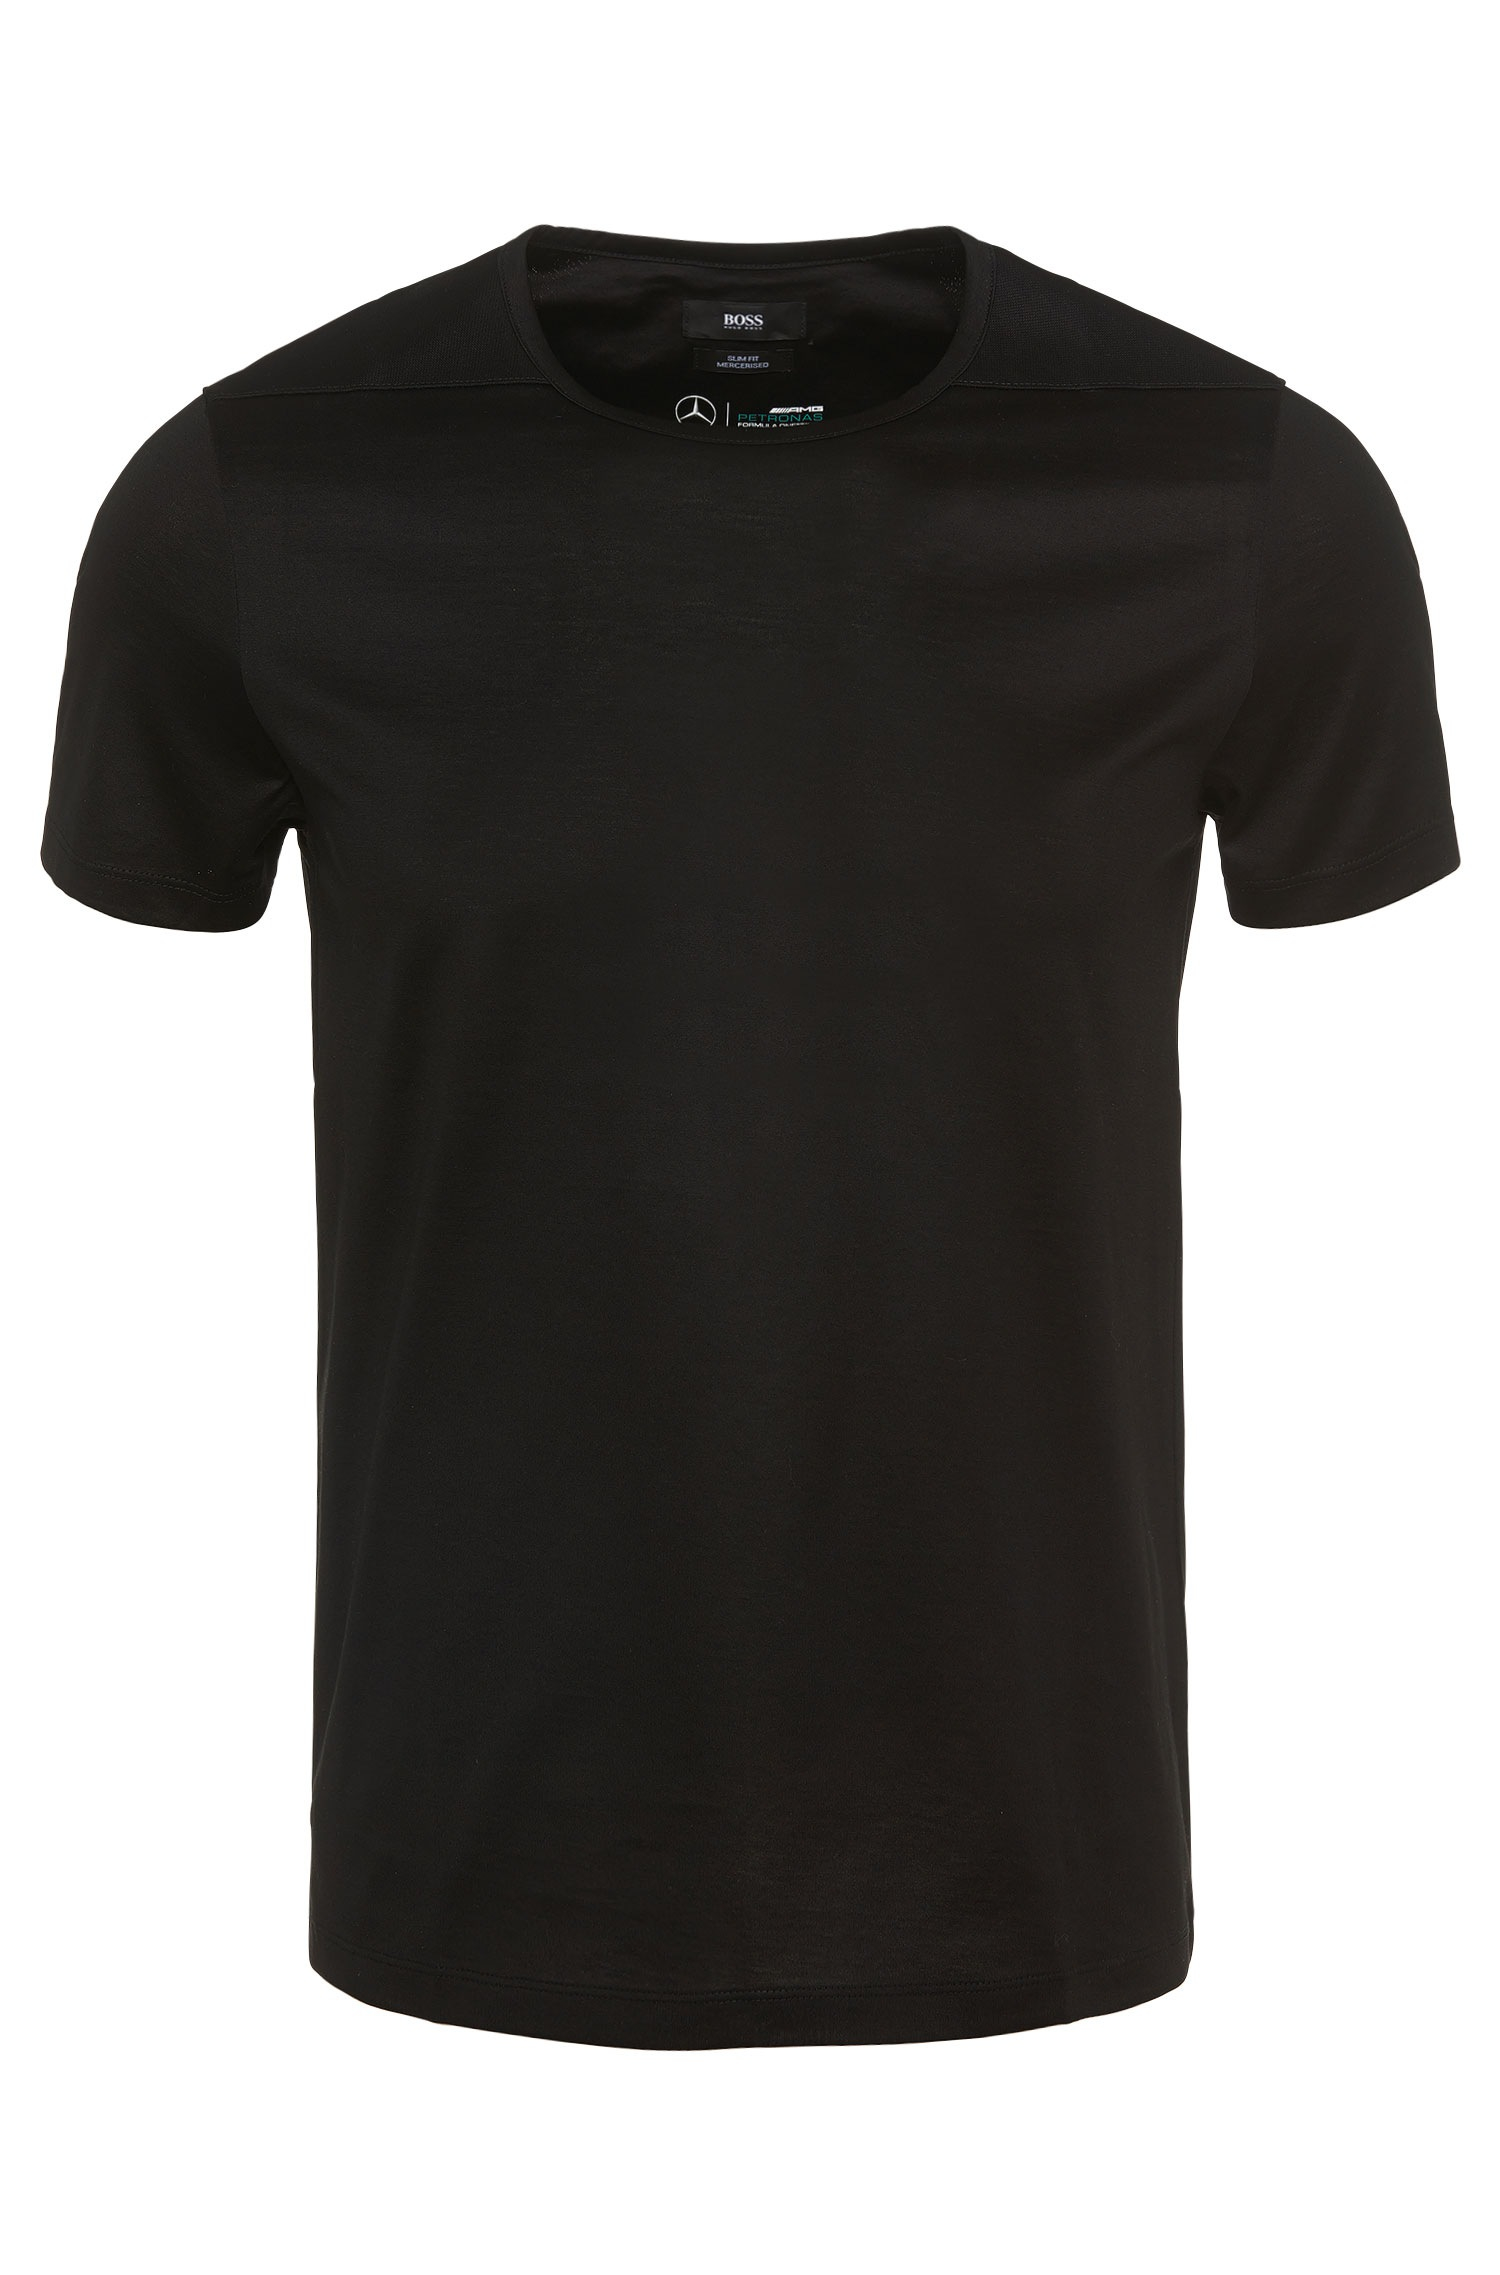 Lyst - Boss 'lecco' | Mercerized Cotton T-shirt in Black for Men